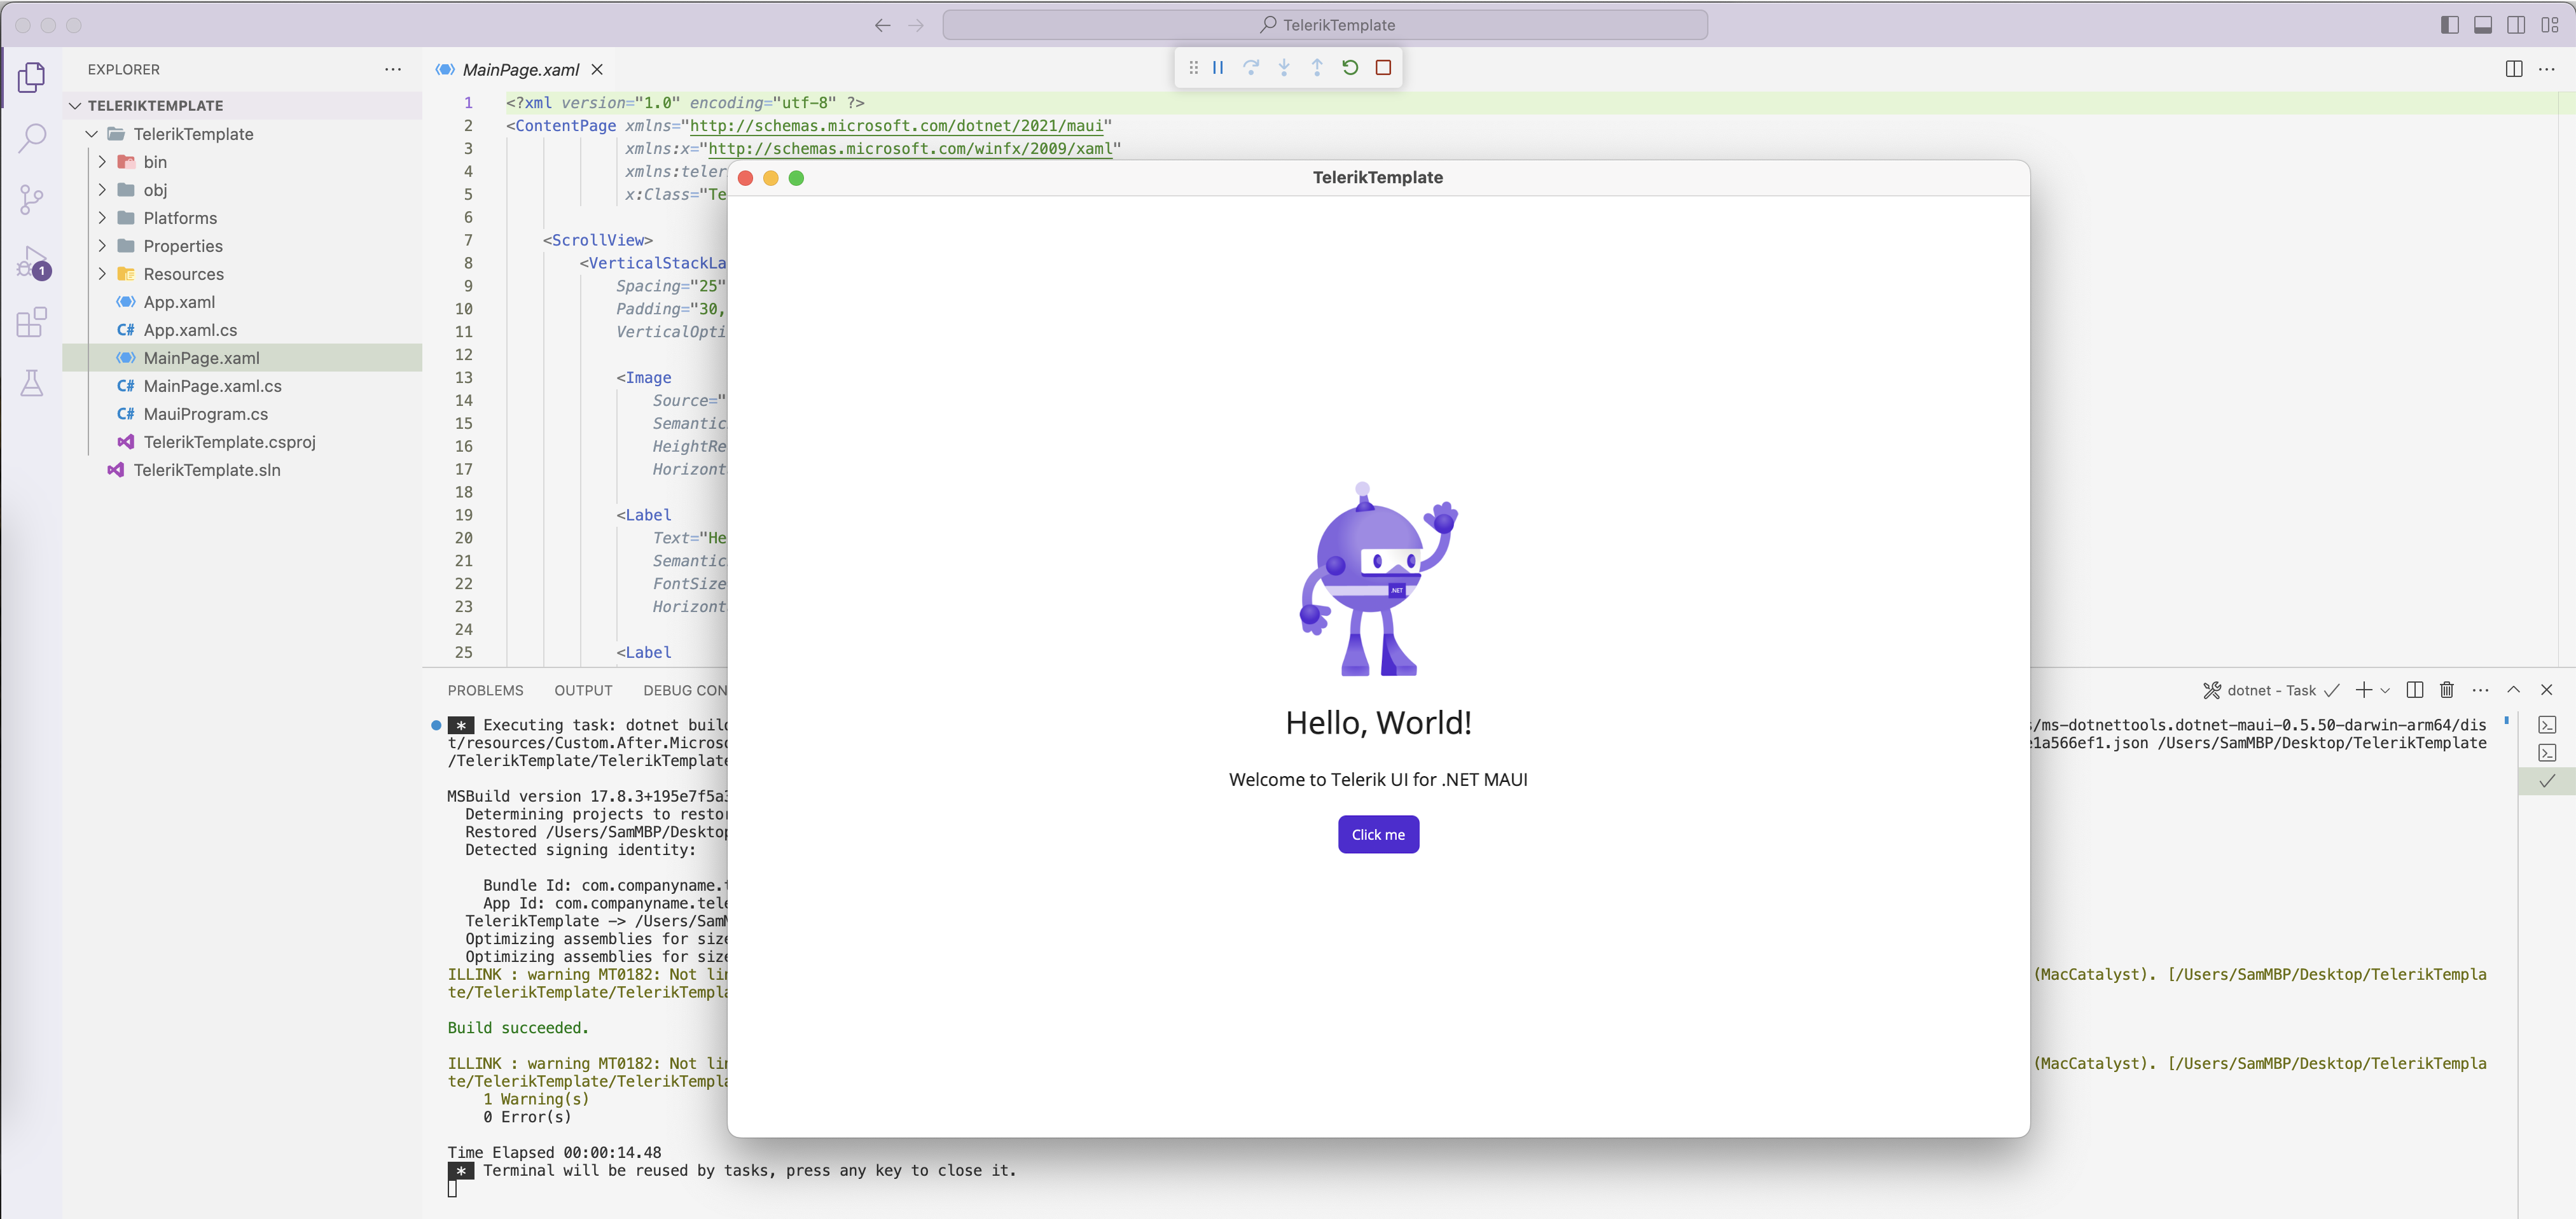 Hello World - Welcome to Telerik UI for .NET MAUI